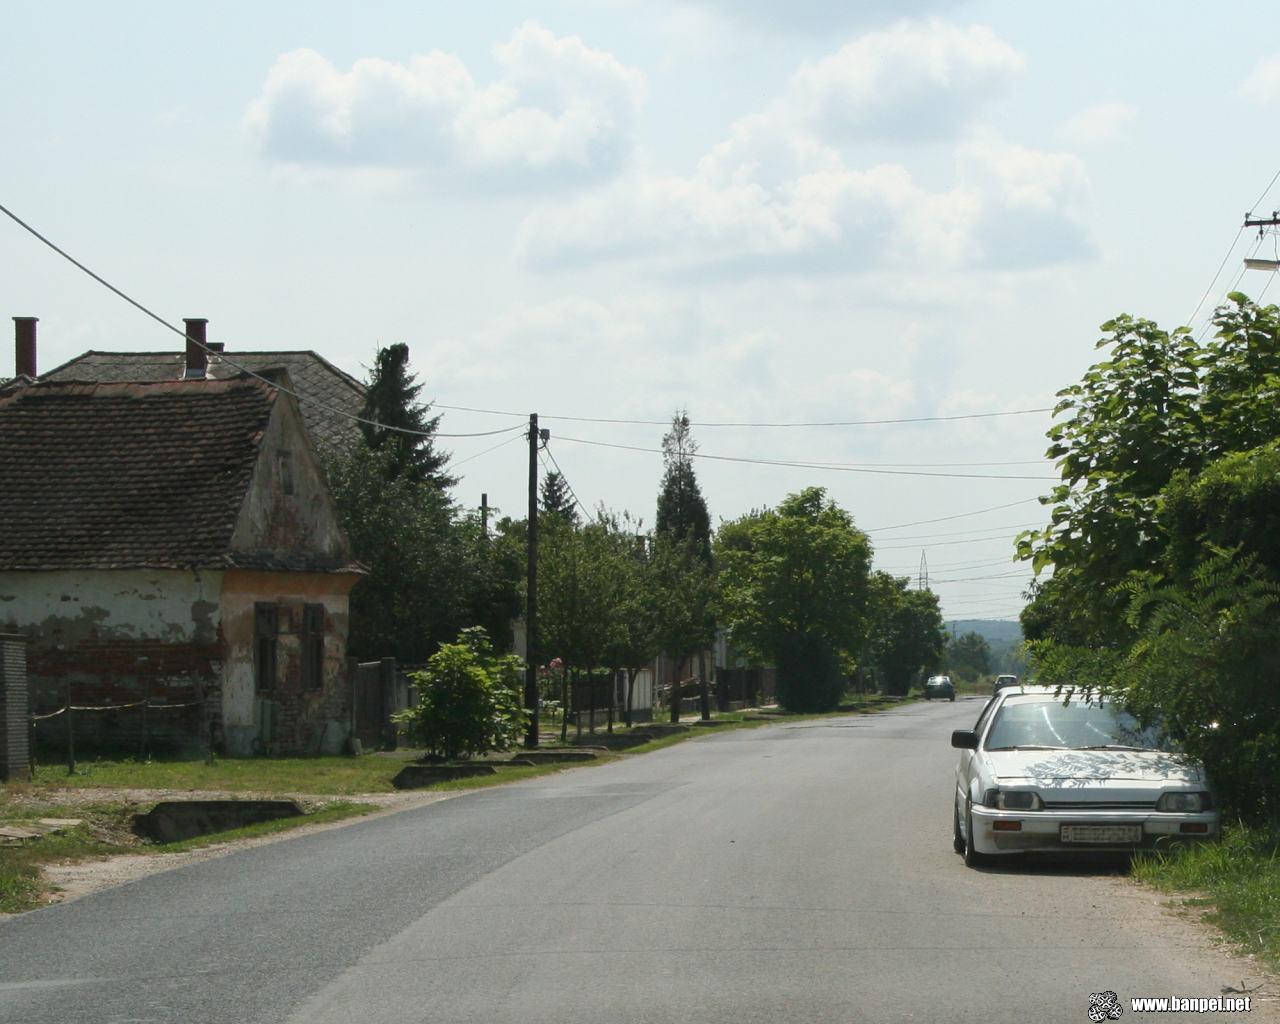 Honda CRX Mk1 in Hungary